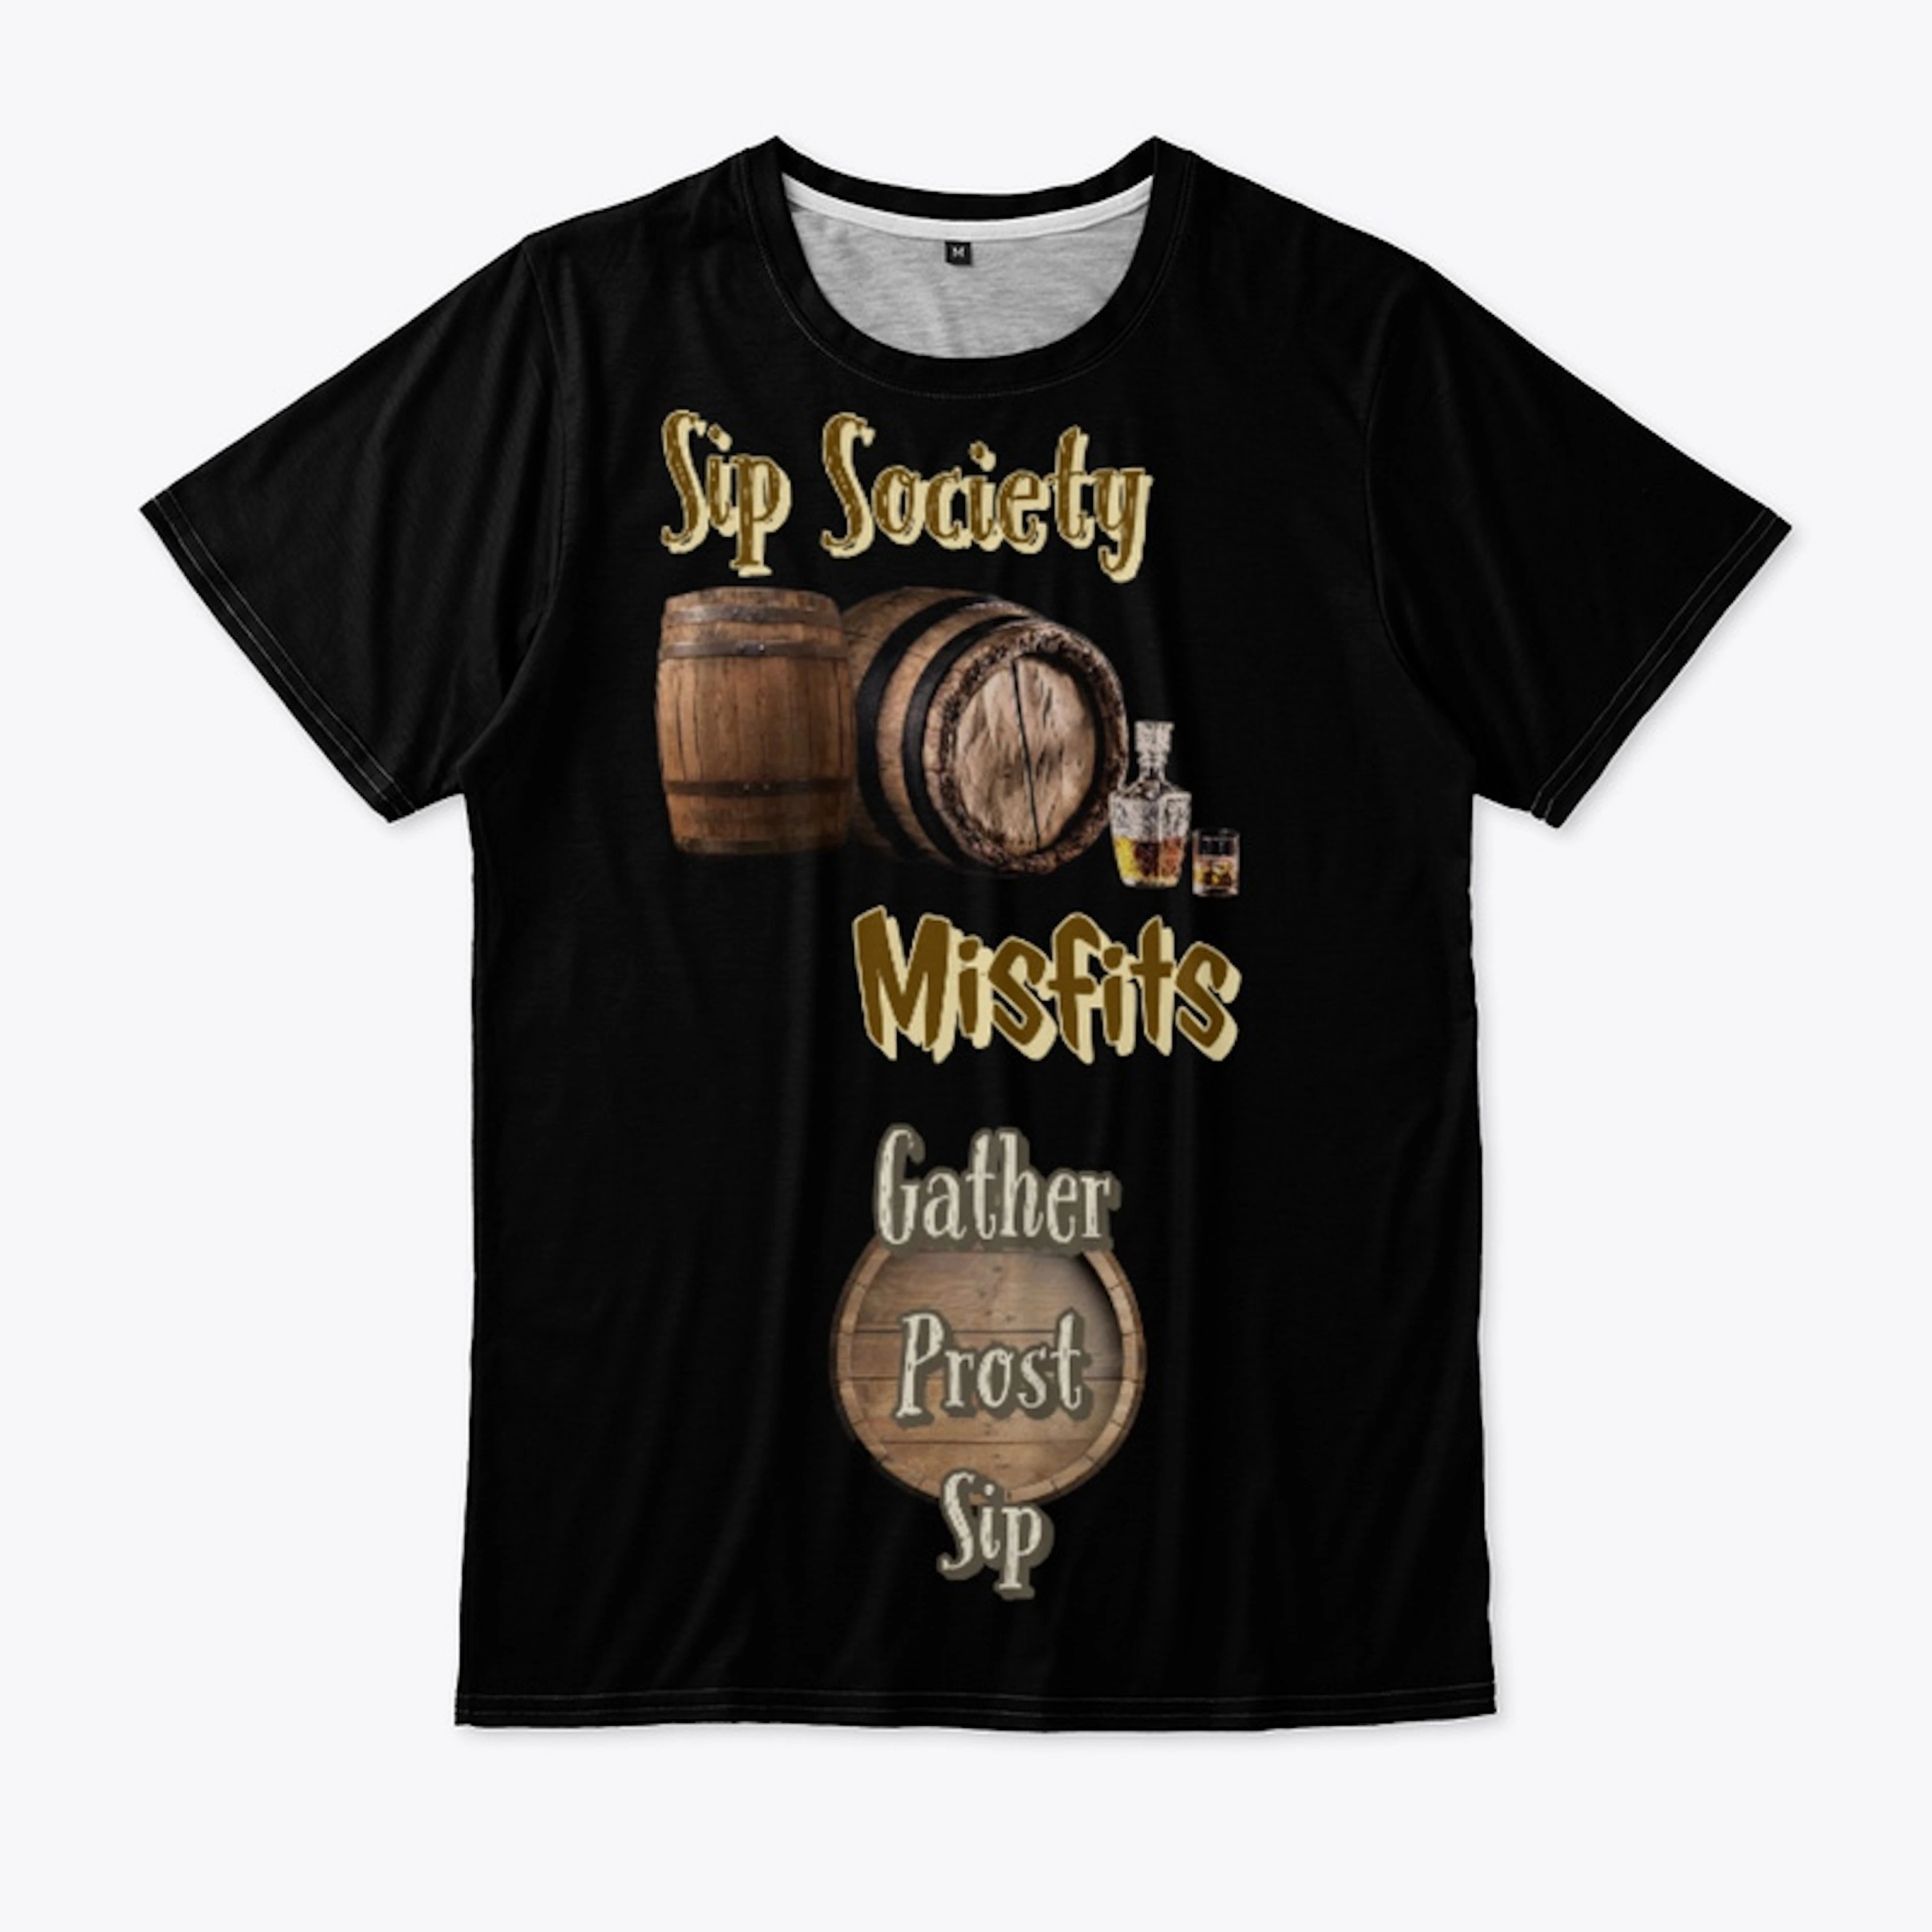 Sip Society Misfits  <sipfits>